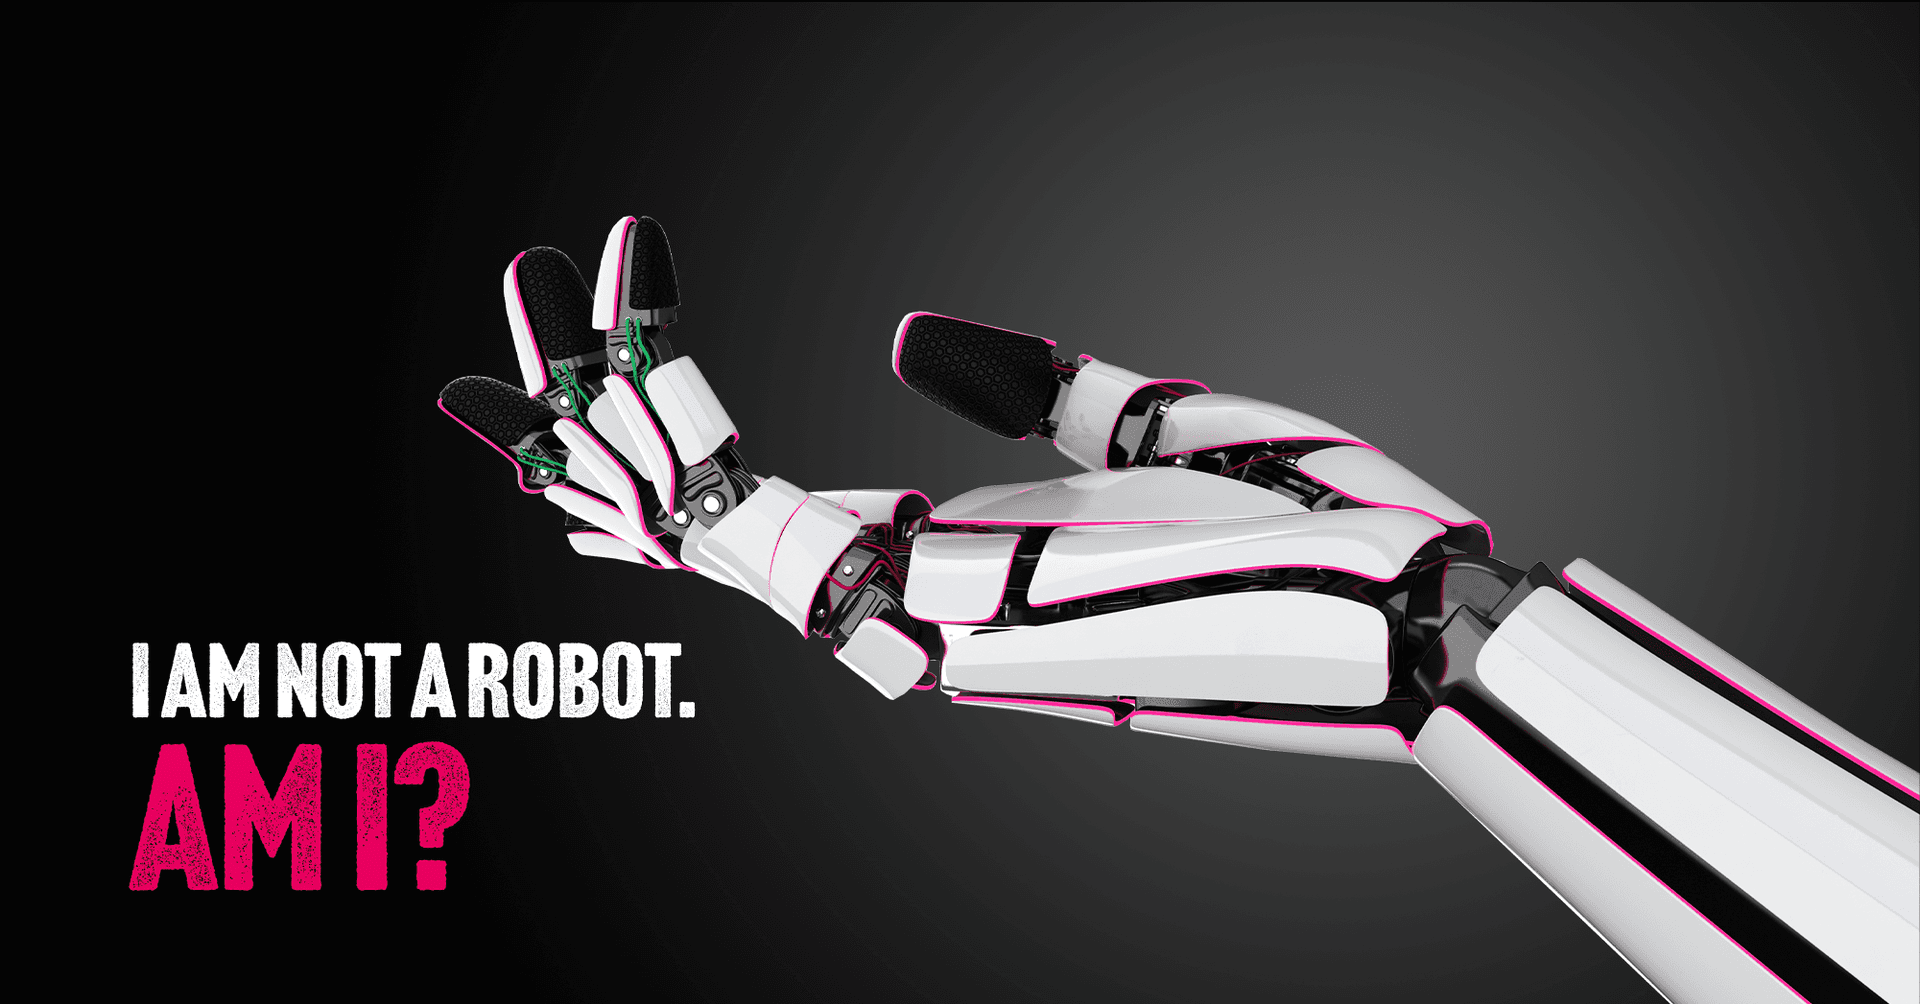 Recaptcha, Click to prove you are human, says the robot hero image